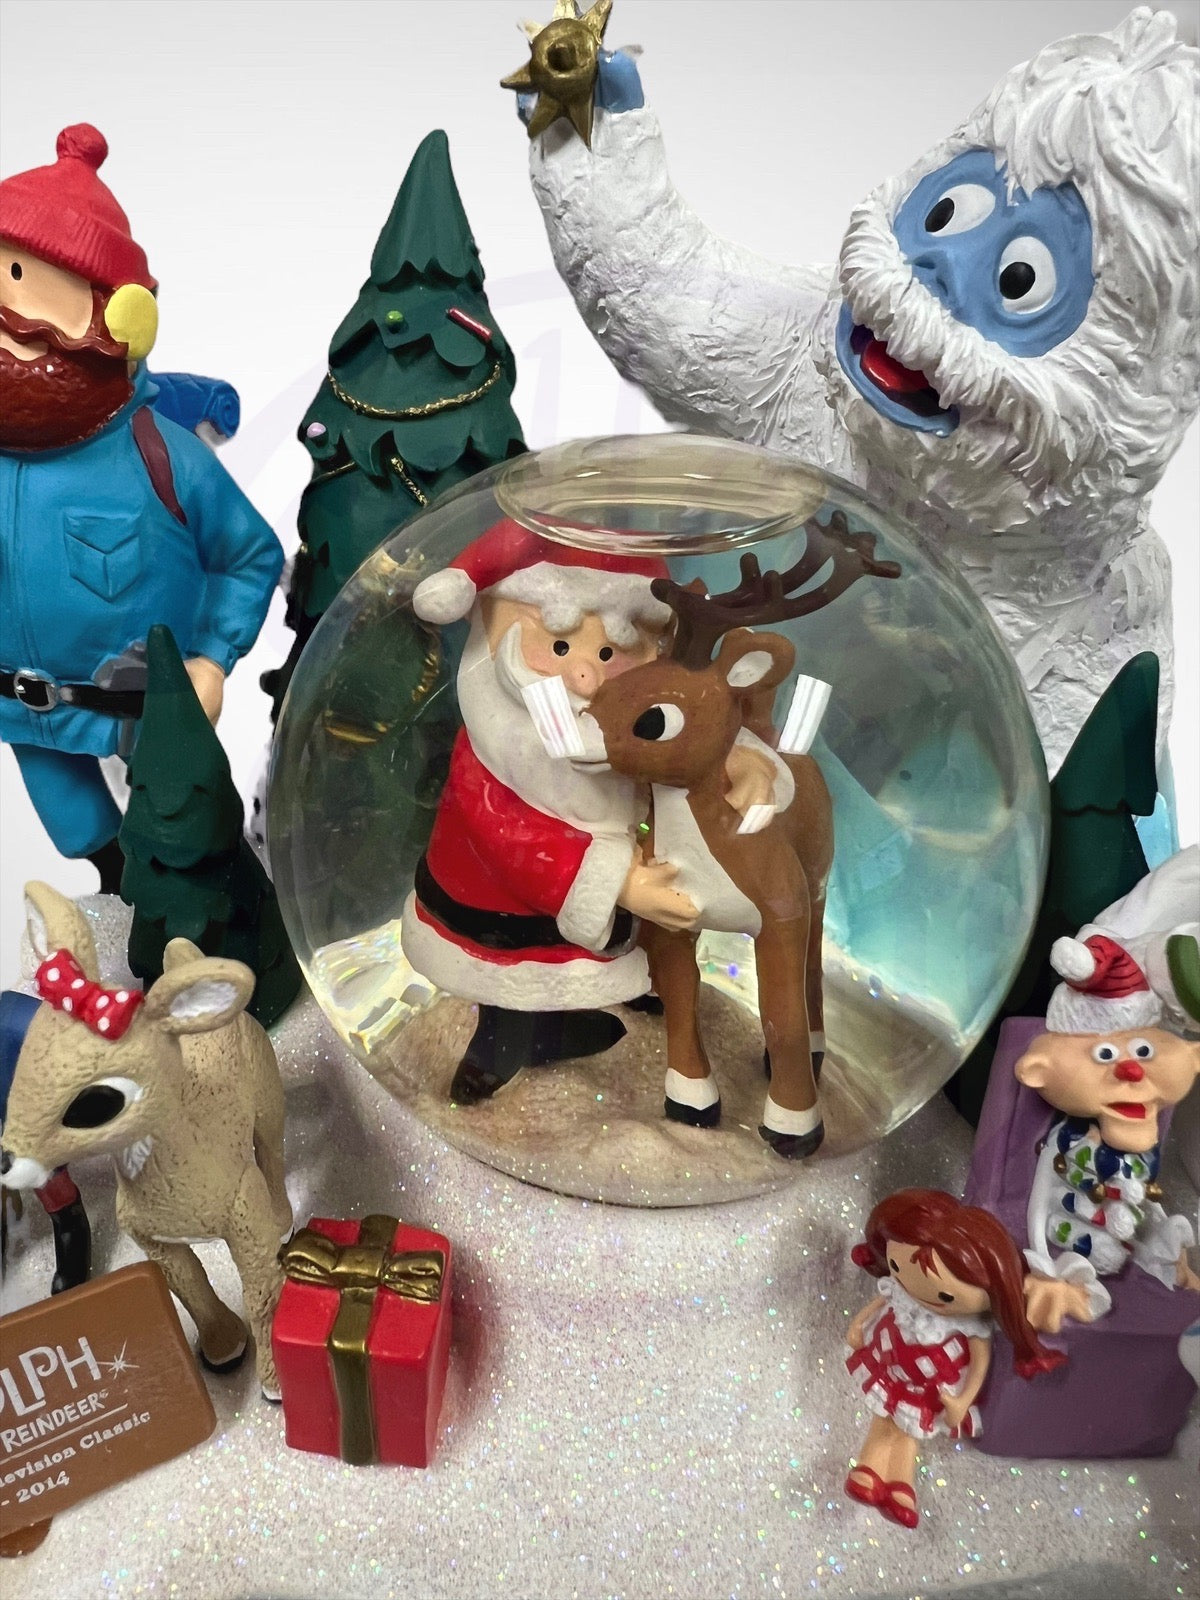 Hallmark Rudolph - Happy 50th Rudolph Anniversary Waterball Figurine